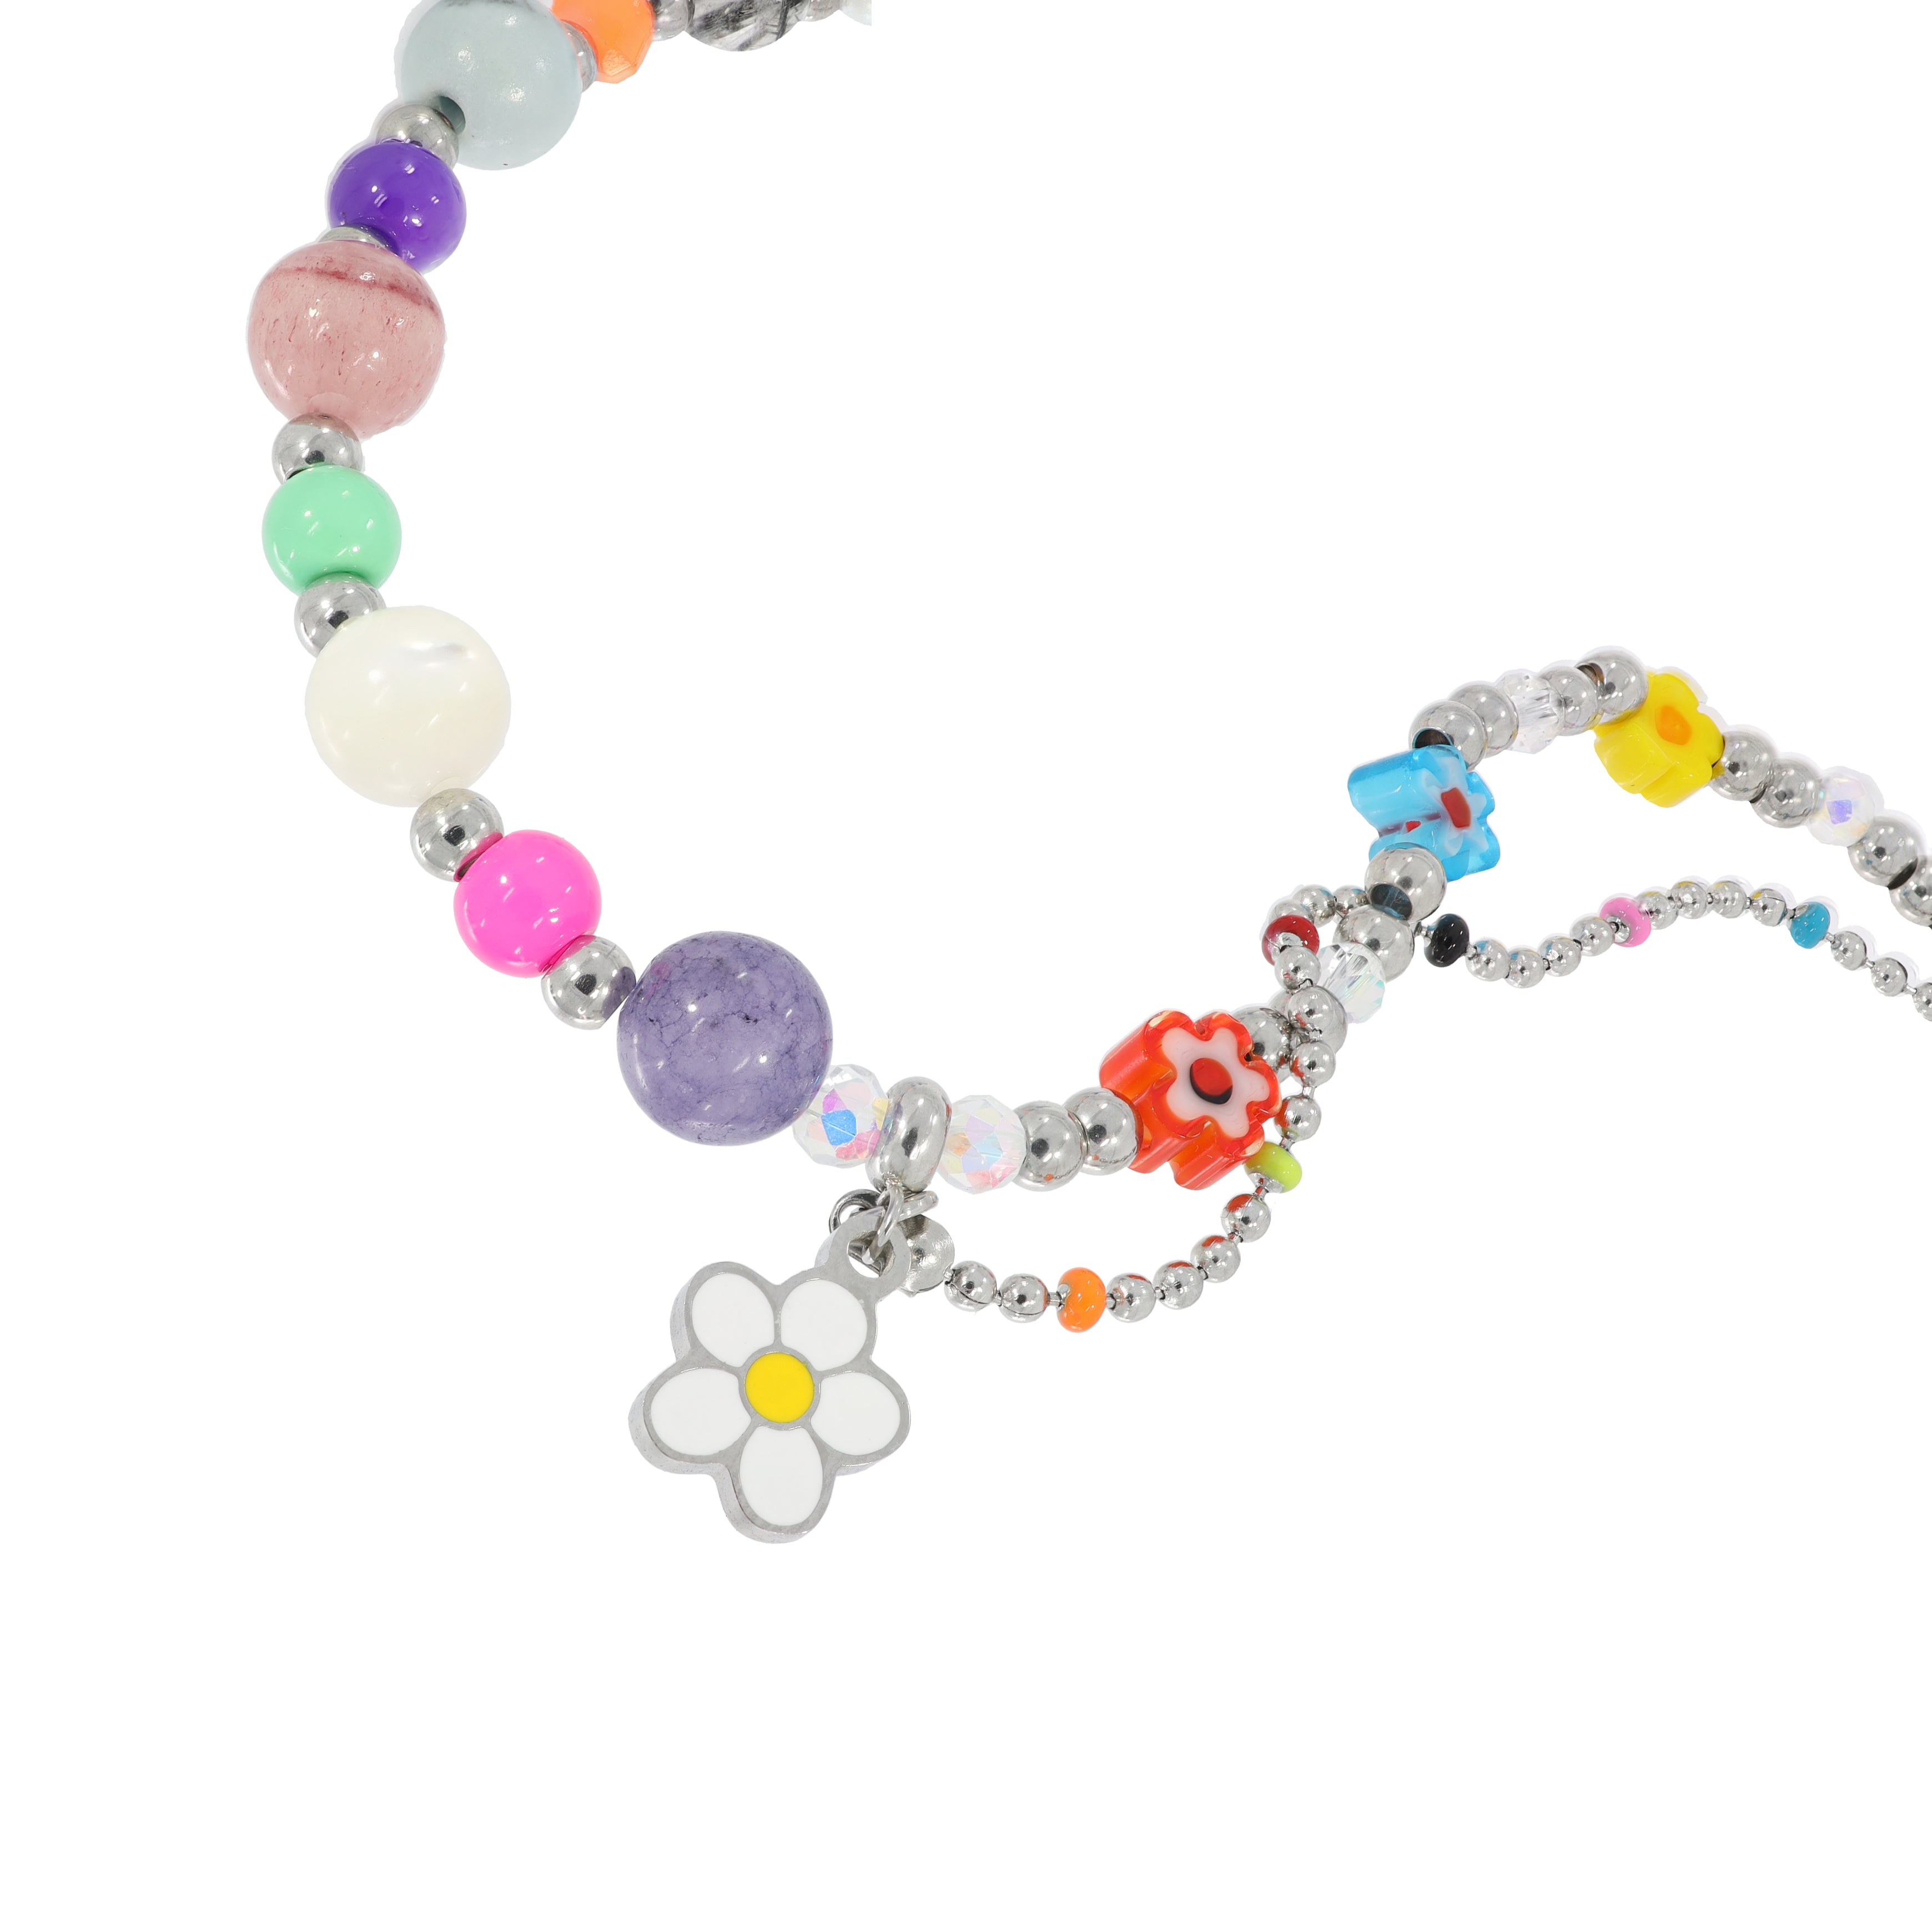 Colorful Daisy Beads Bracelet